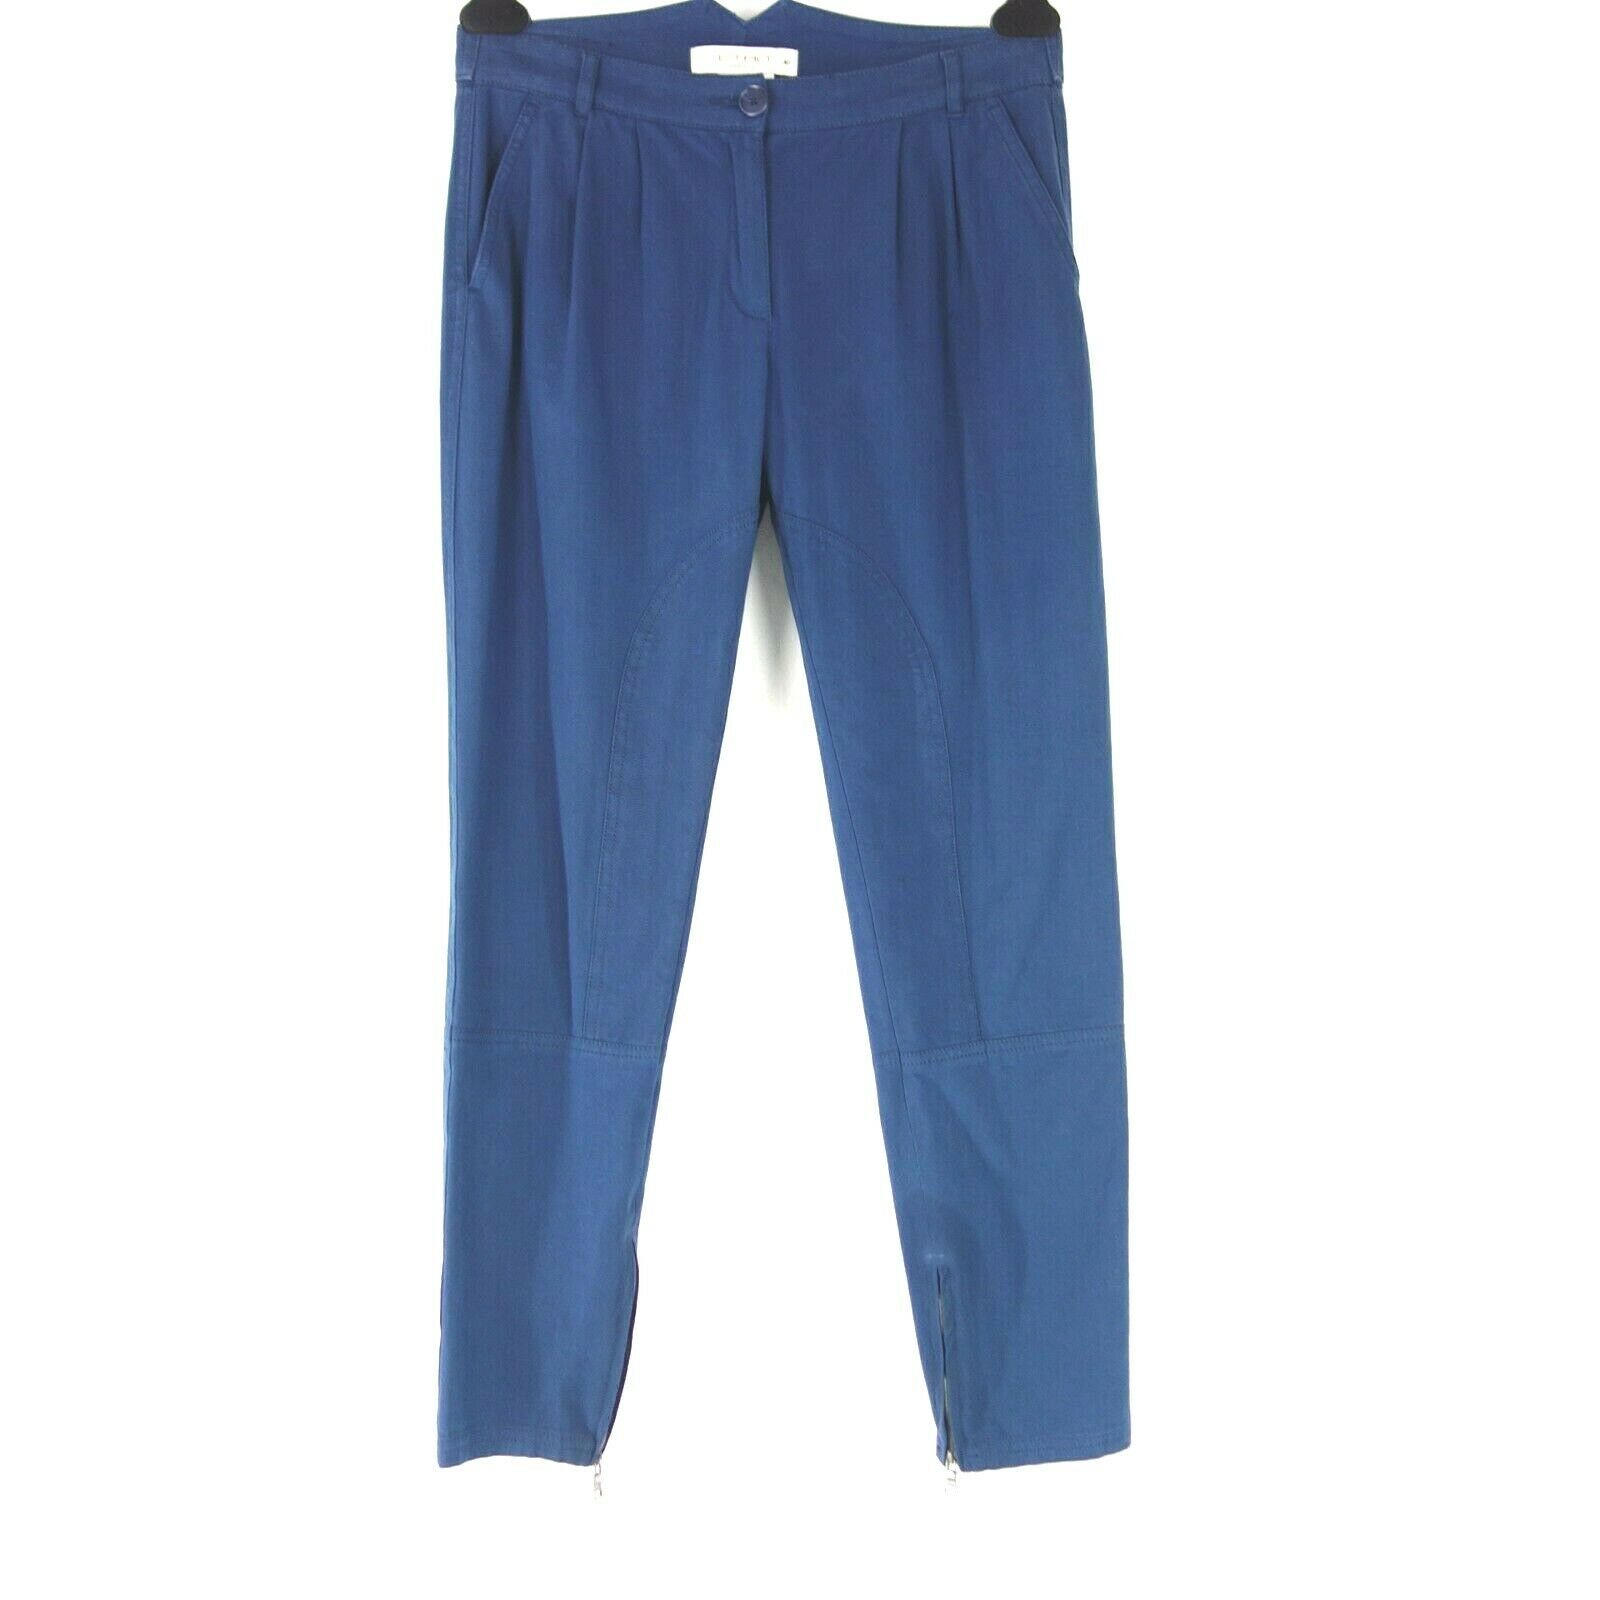 ETRO Damen Hose Chino Style Stoffhose Blau IT 40 DE 34 Bundfalte Np 319 Neu